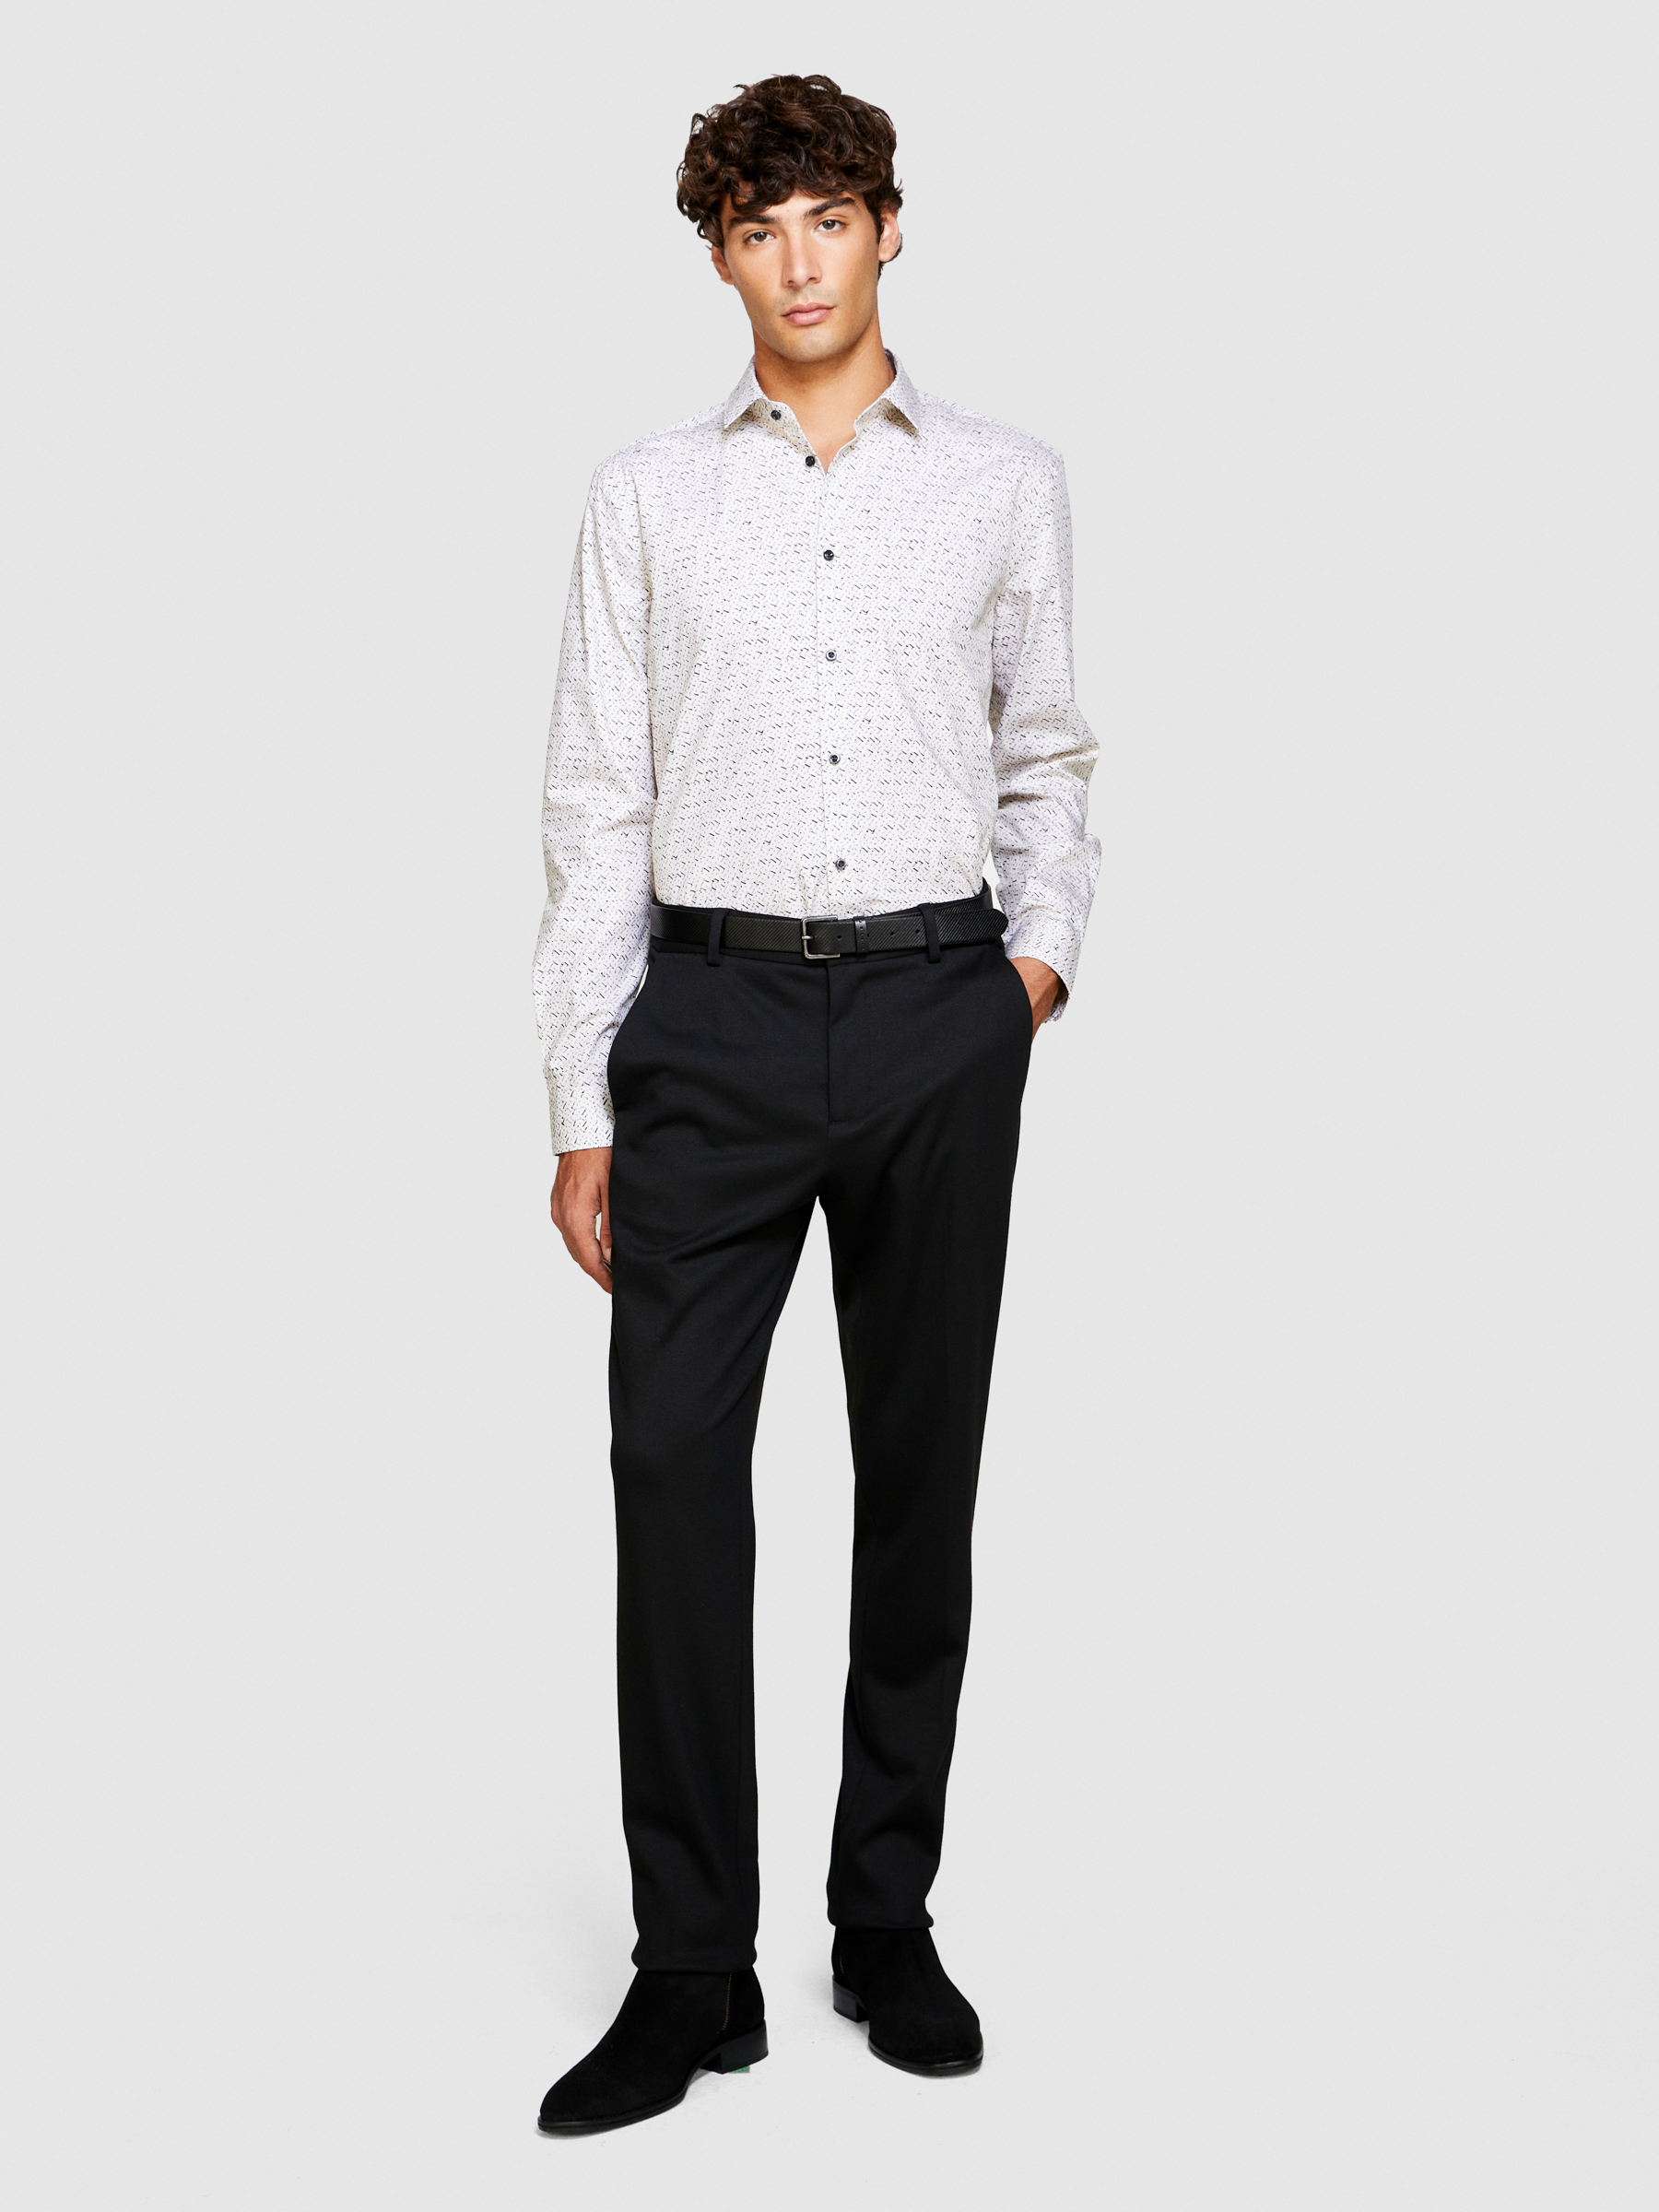 Sisley - Slim Fit Printed Shirt, Man, Creamy White, Size: 46